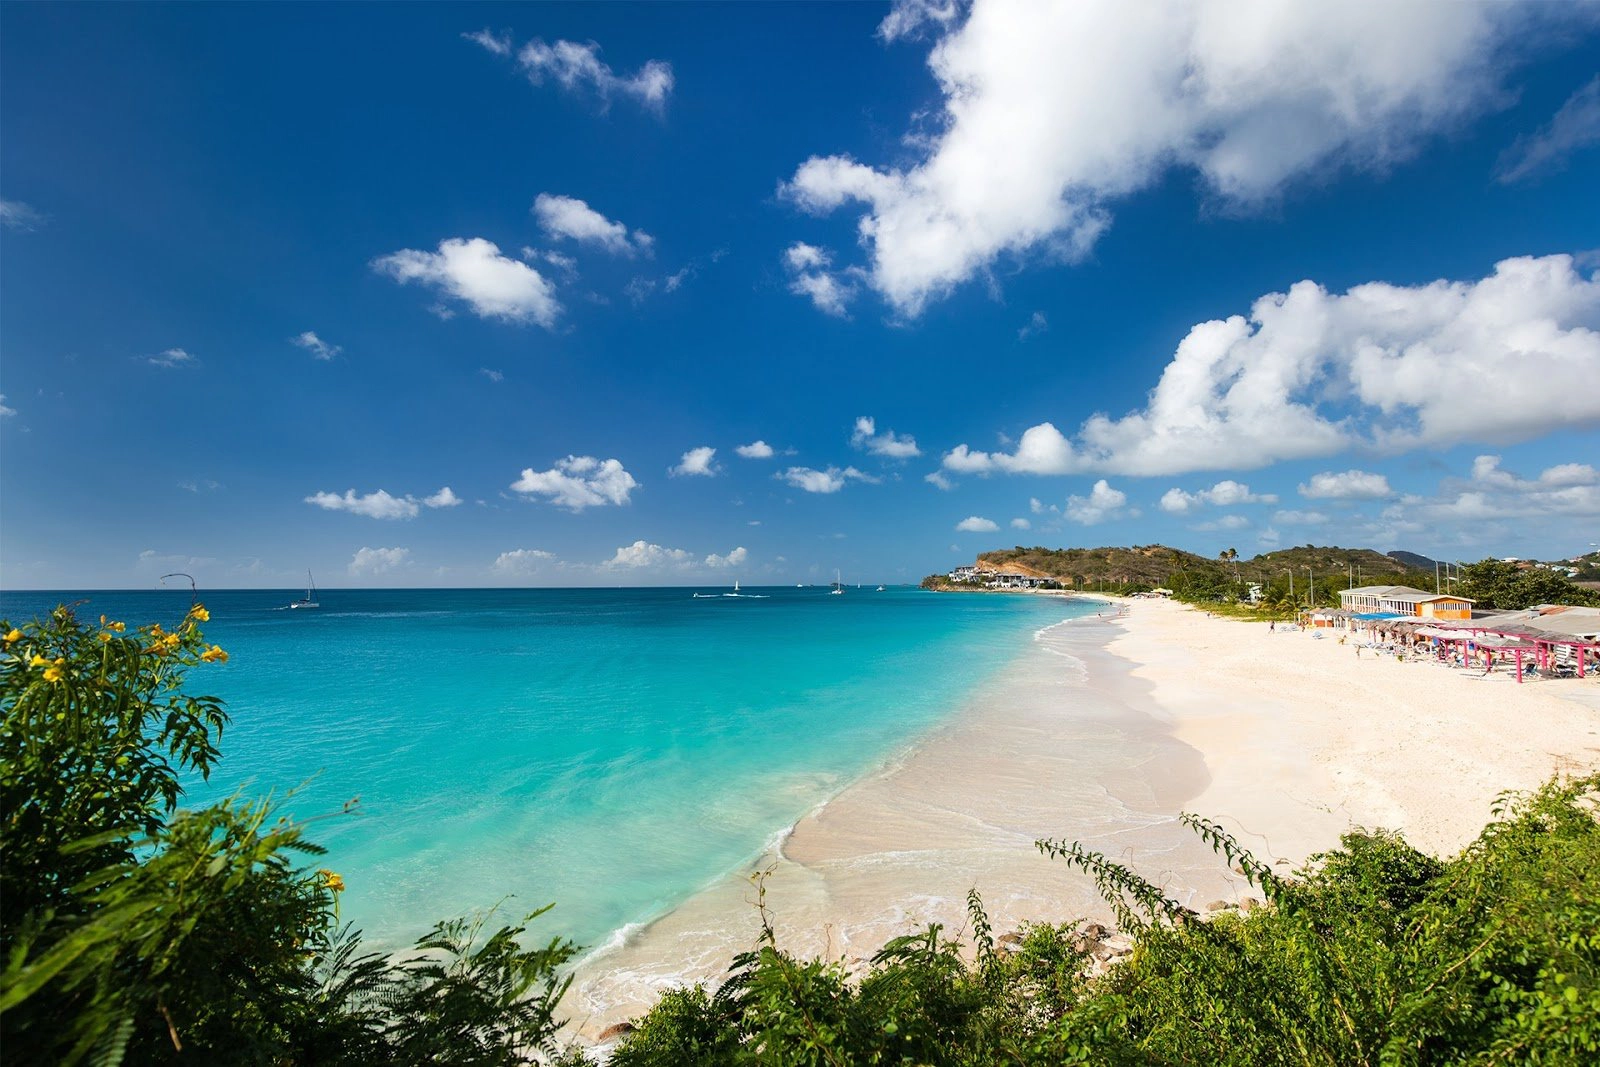  Darkwood  strand - Antigua és Barbuda